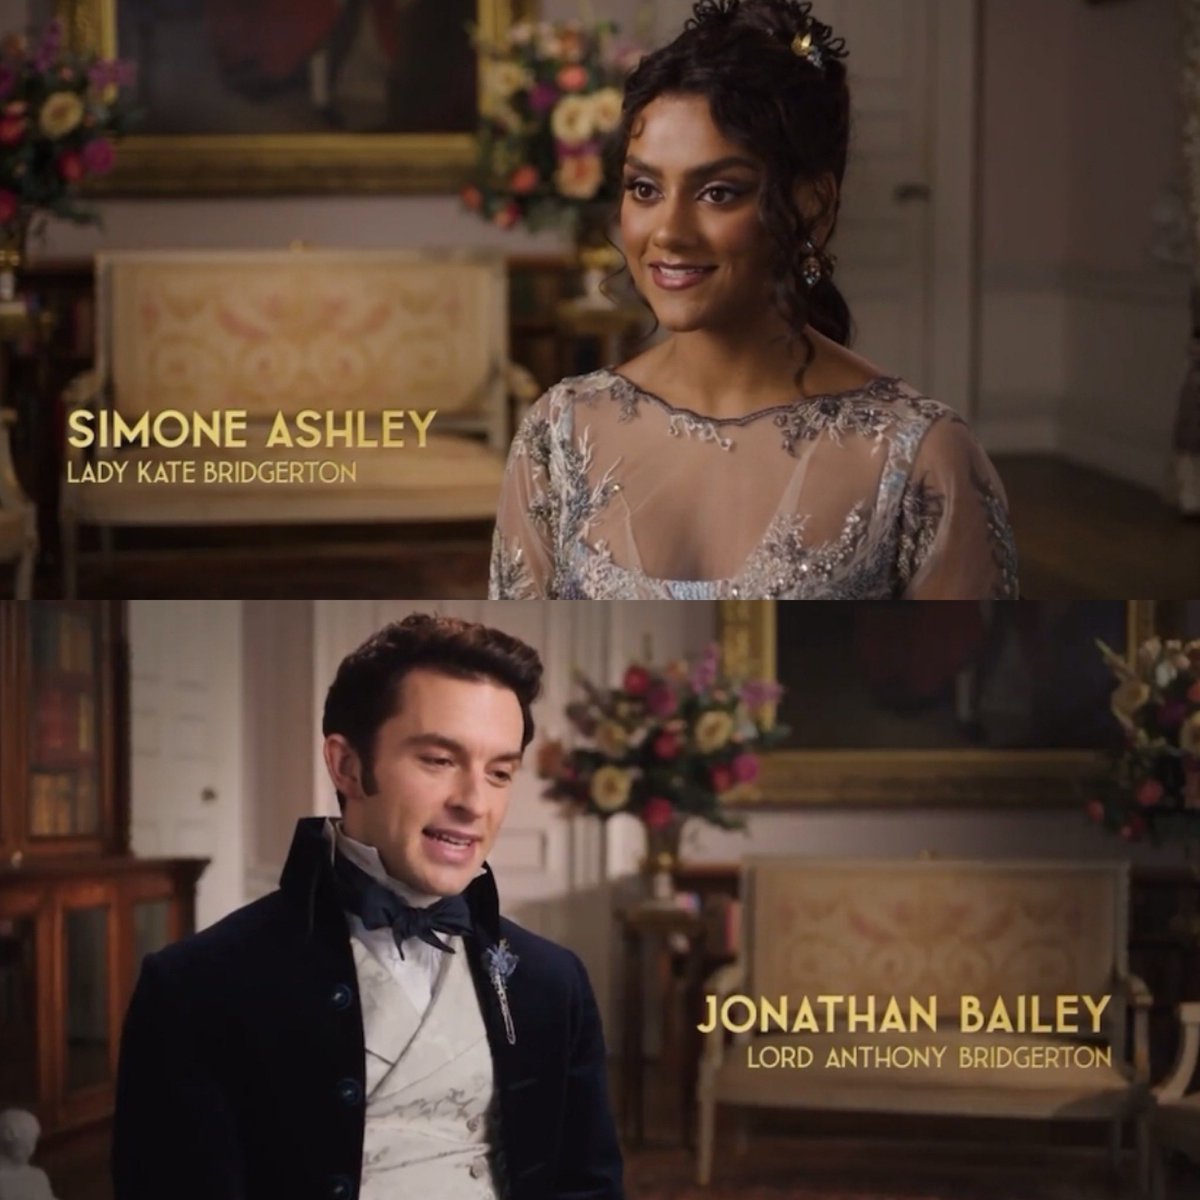 Simone Ashley as Lady Kate Bridgerton and Jonathan Bailey as Lord Anthony Bridgerton behind the scenes of #Bridgerton  season 3 🥹